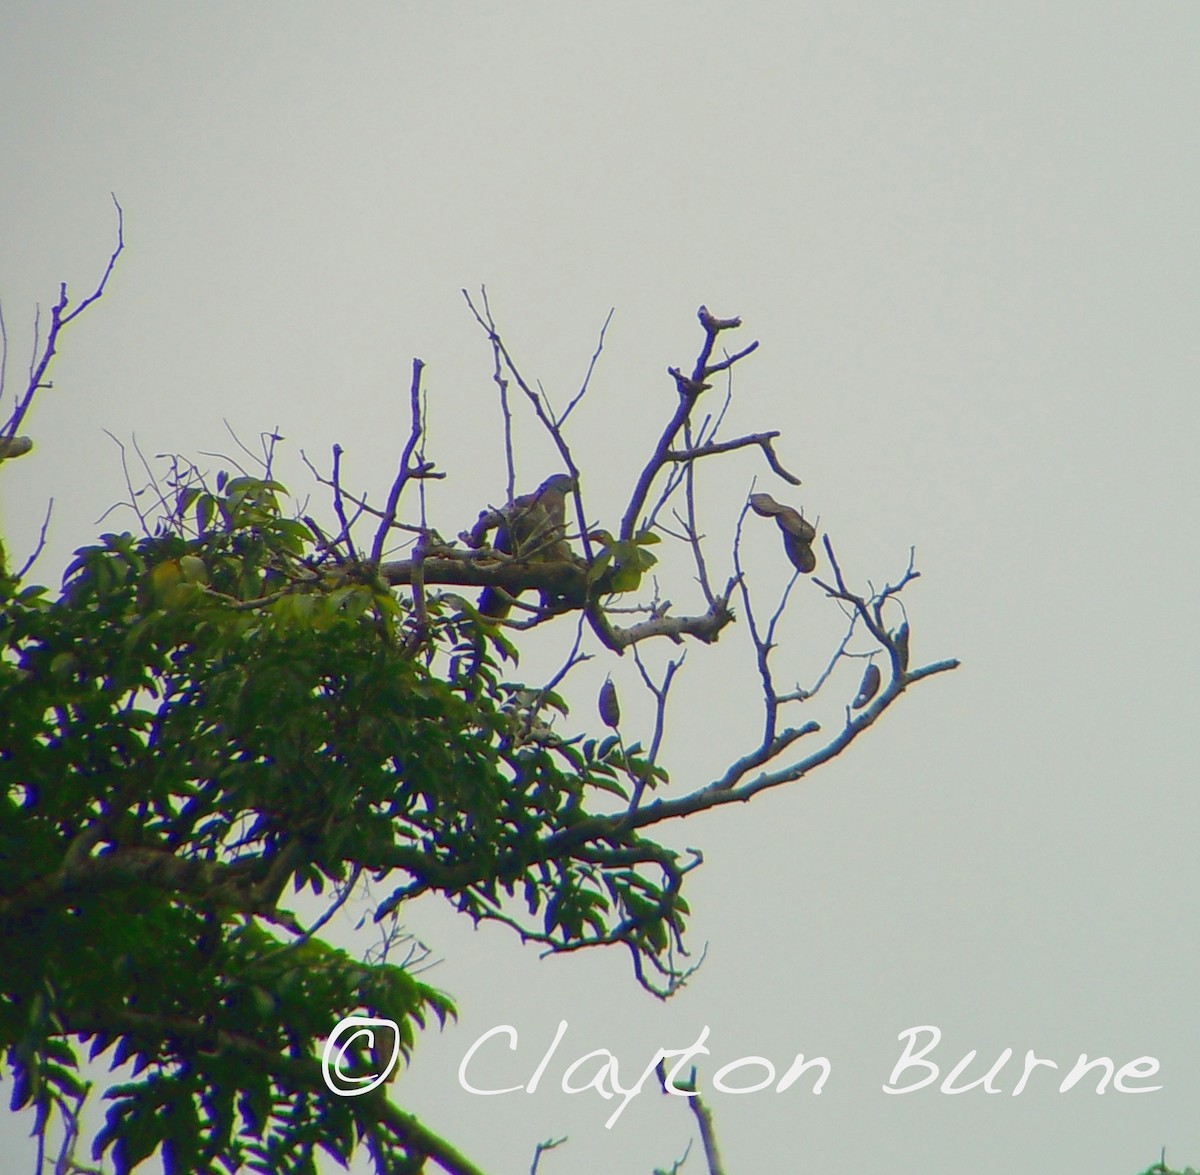 Bronze-naped Pigeon - Clayton Burne